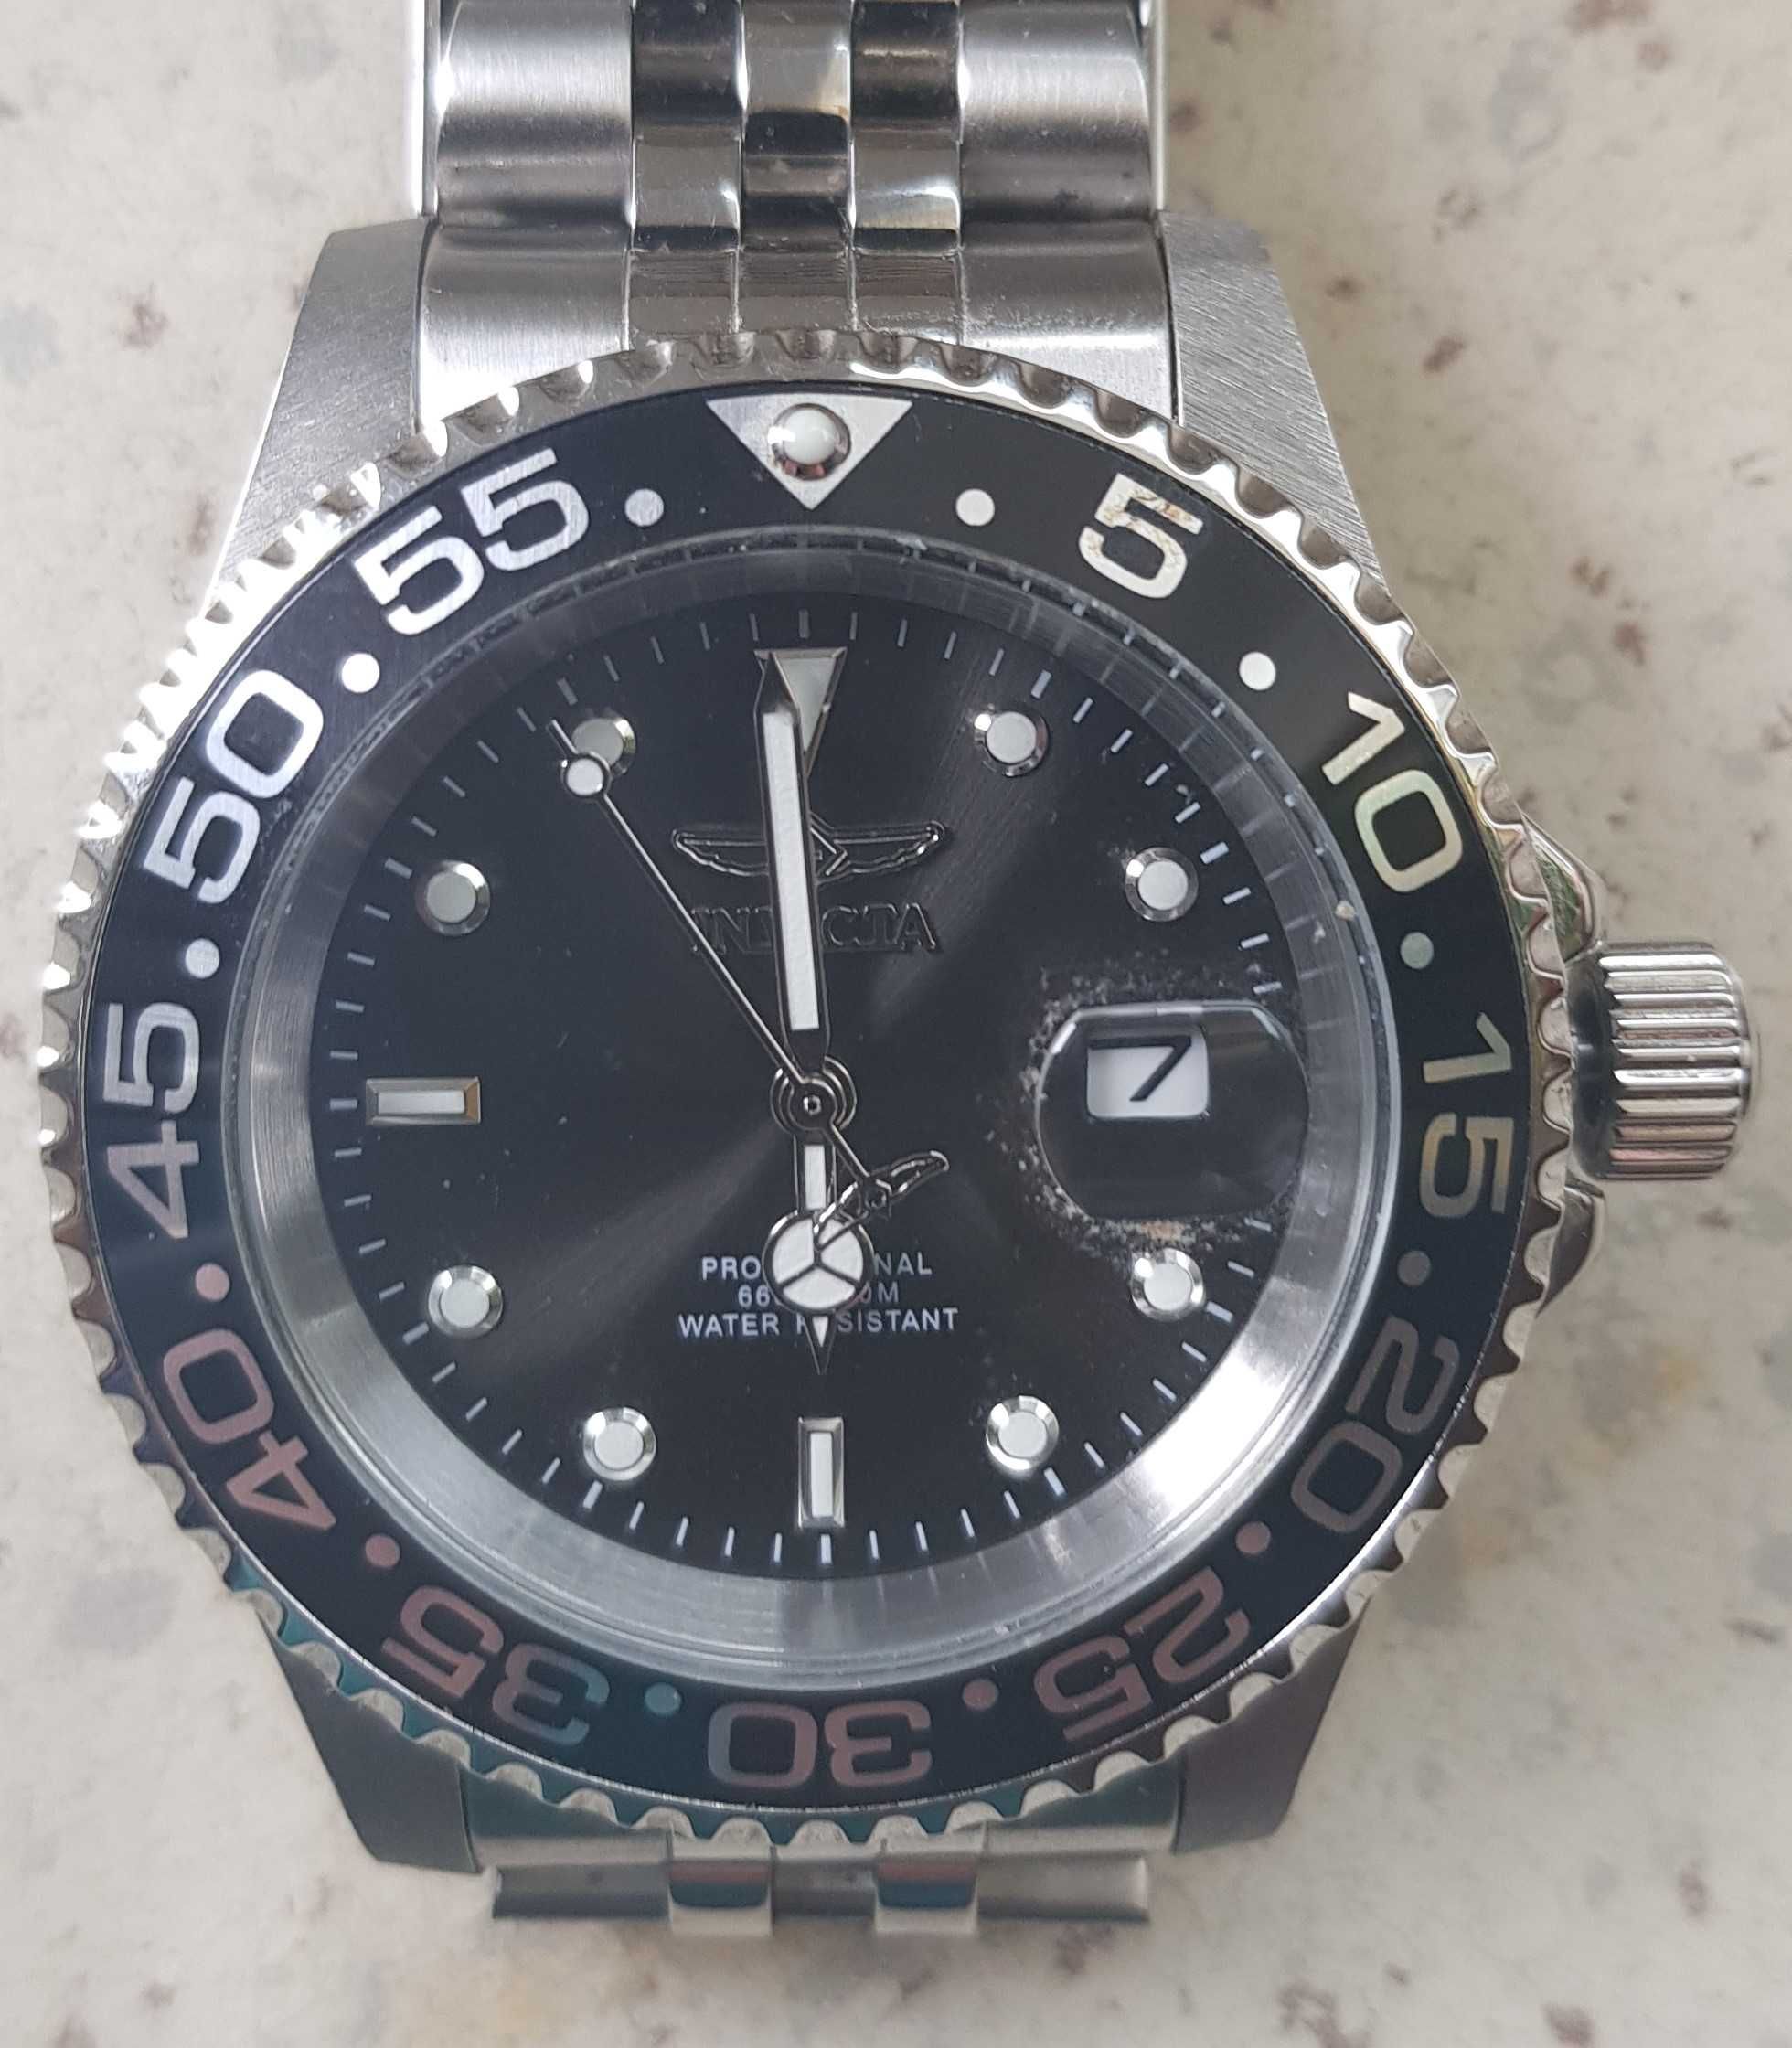 Zegarek męski Invicta Pro Diver model 34104 czarny BATMAN